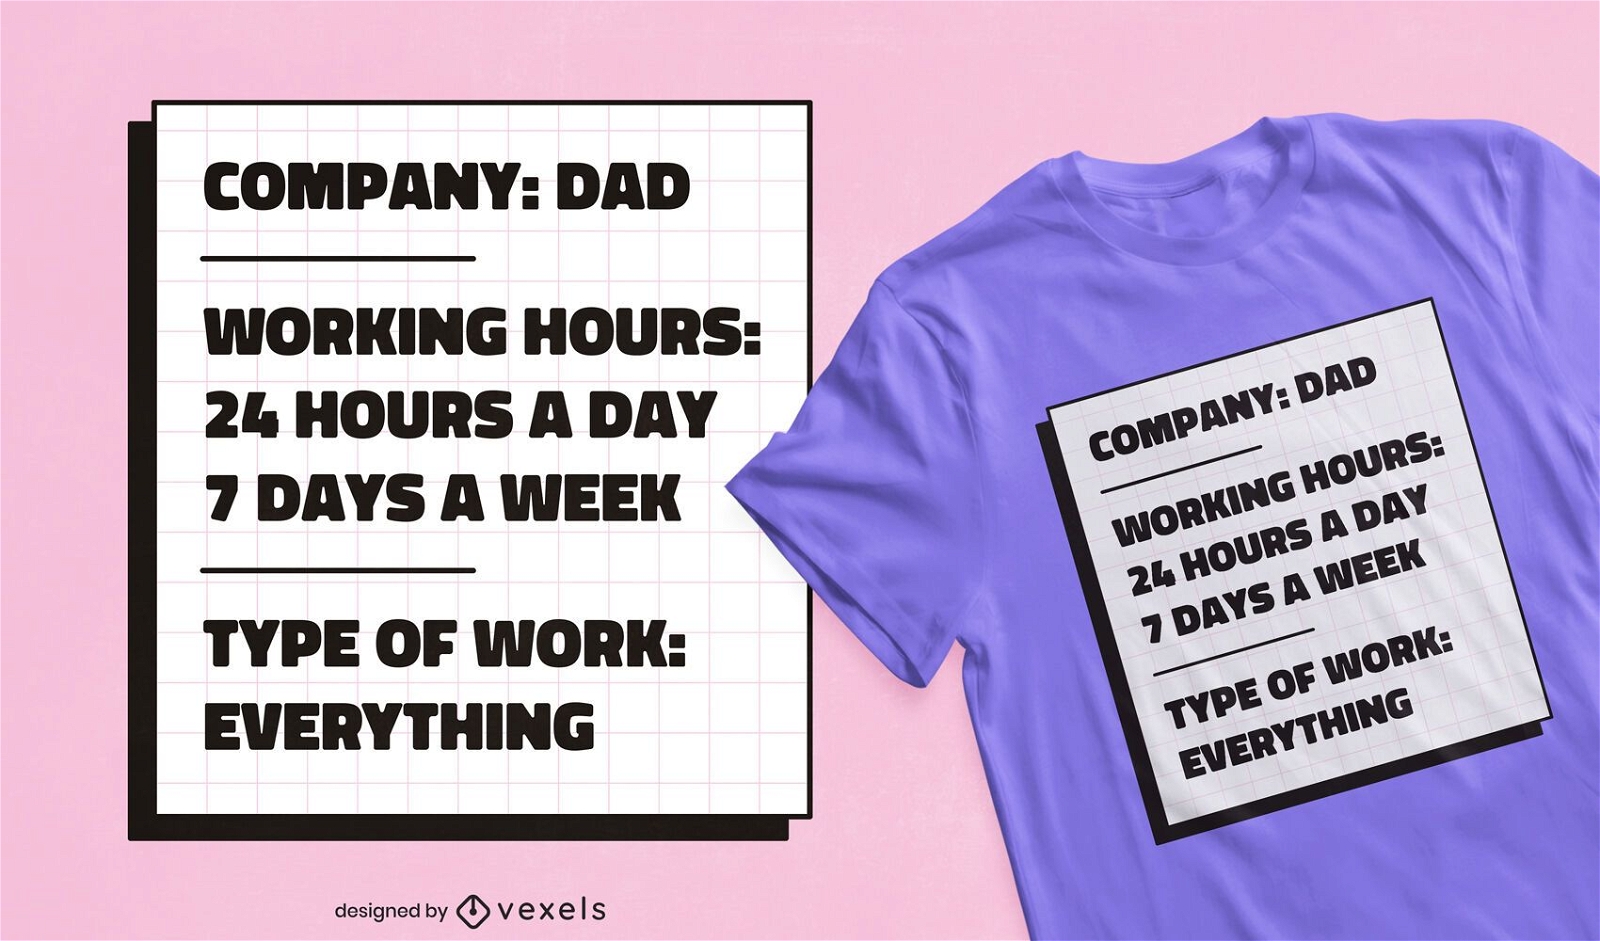 Dad company t-shirt design